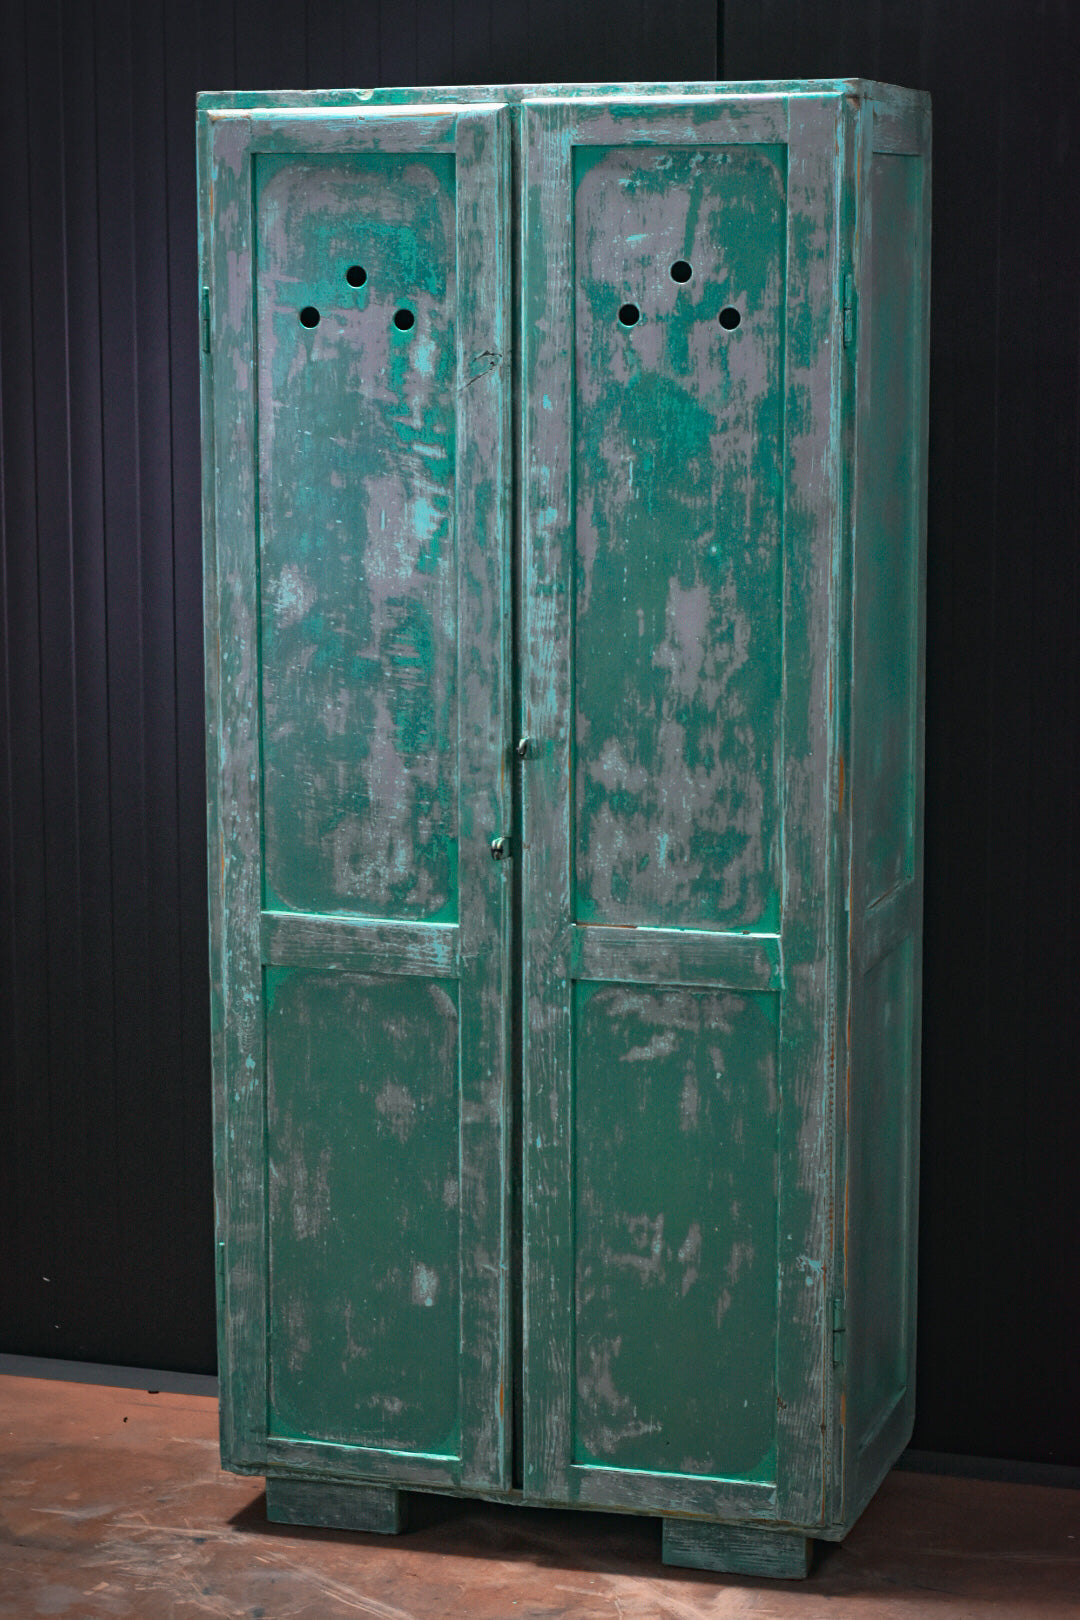 Wooden industrial lockers